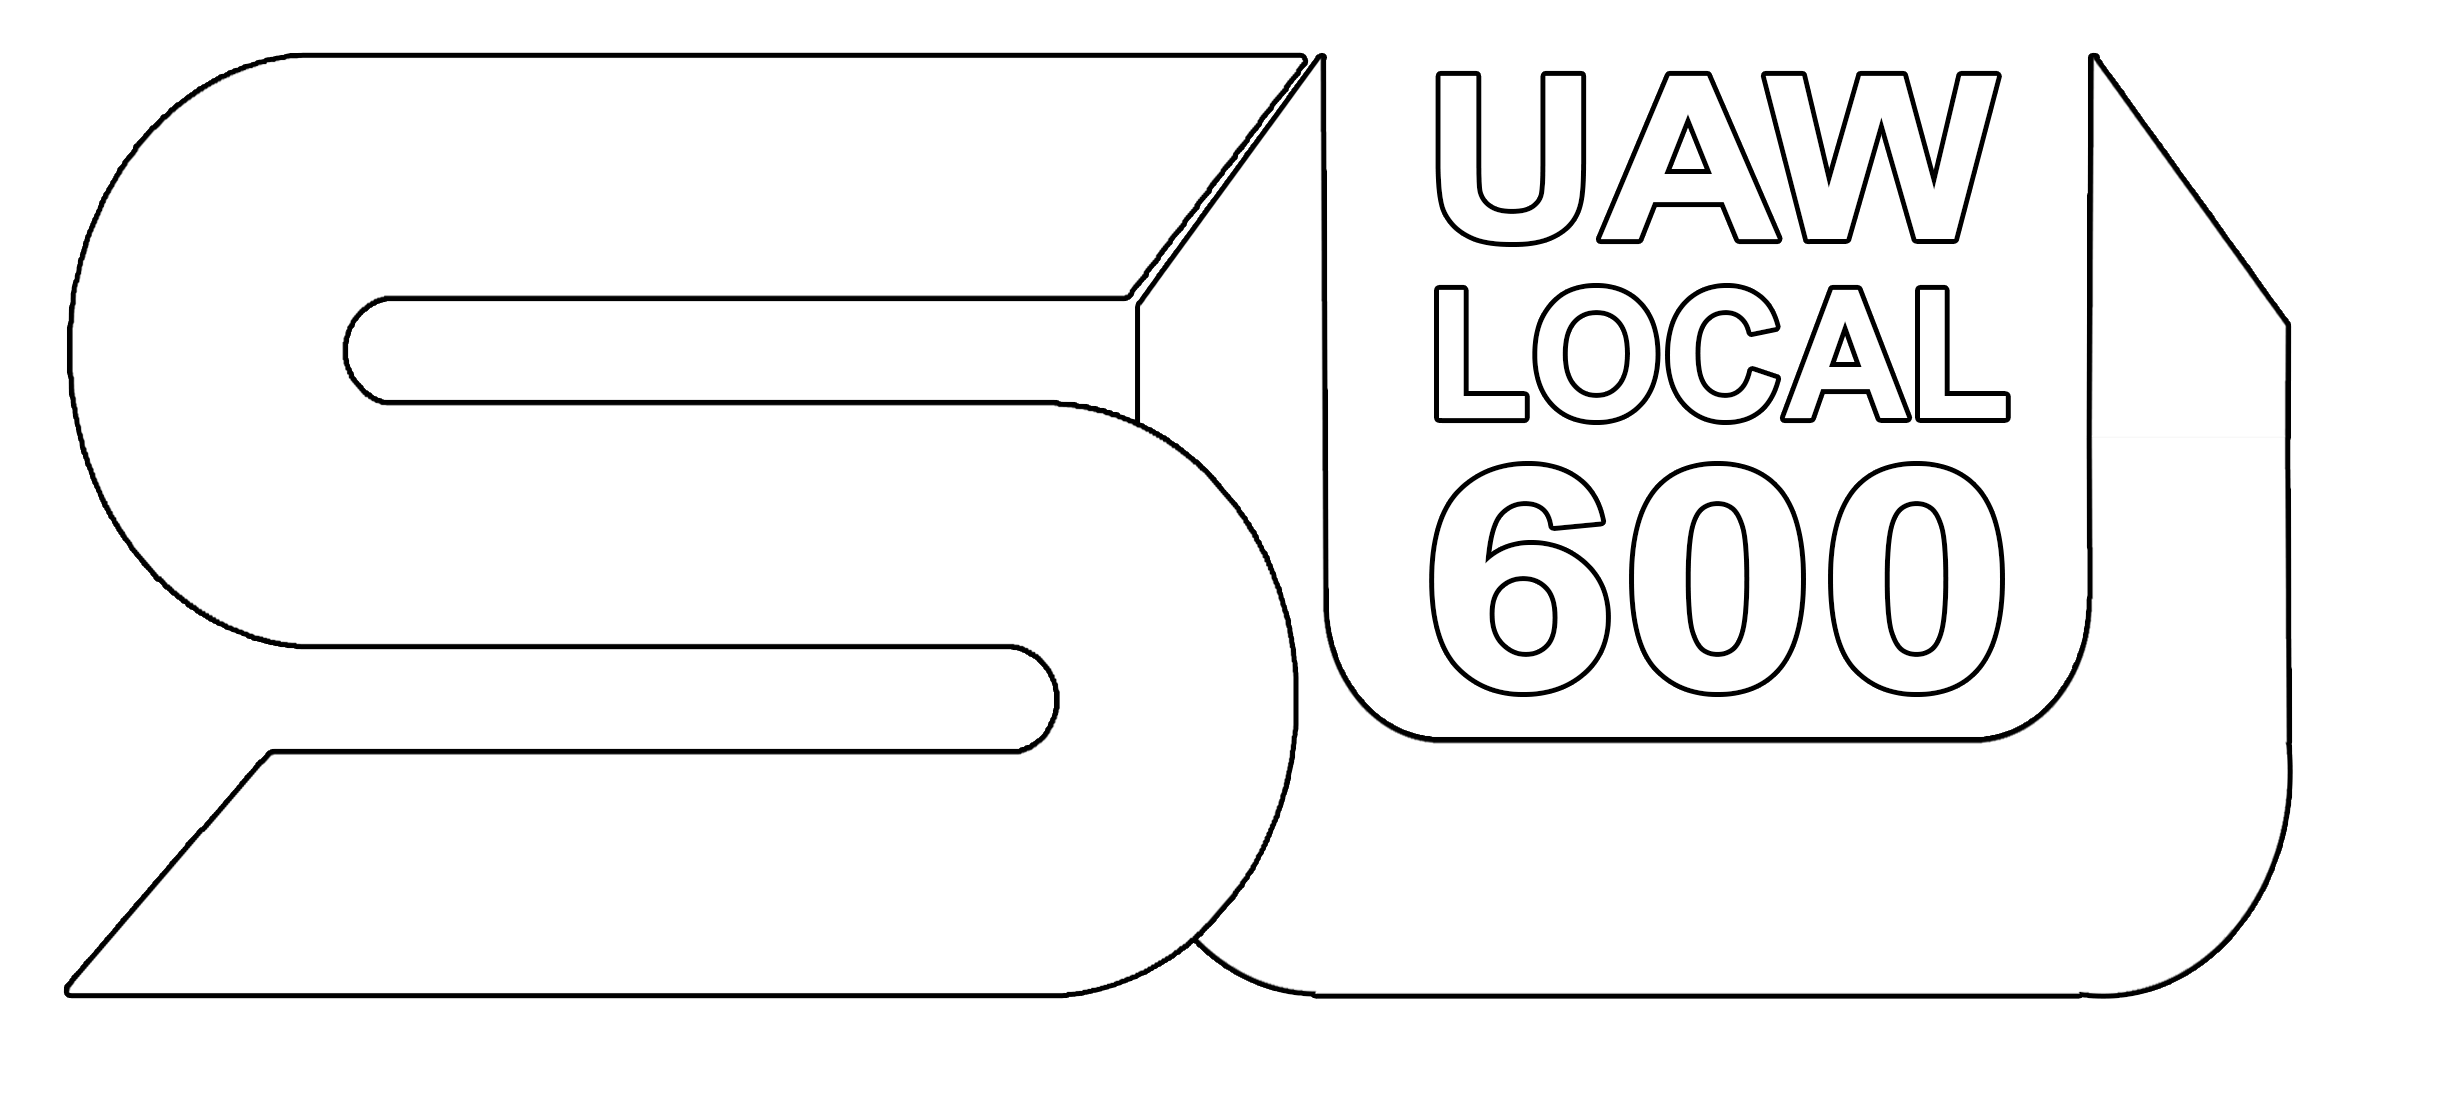 Local 600 UAW Logo - Local 600 Steel Unit – Unite. Educate. Organize.